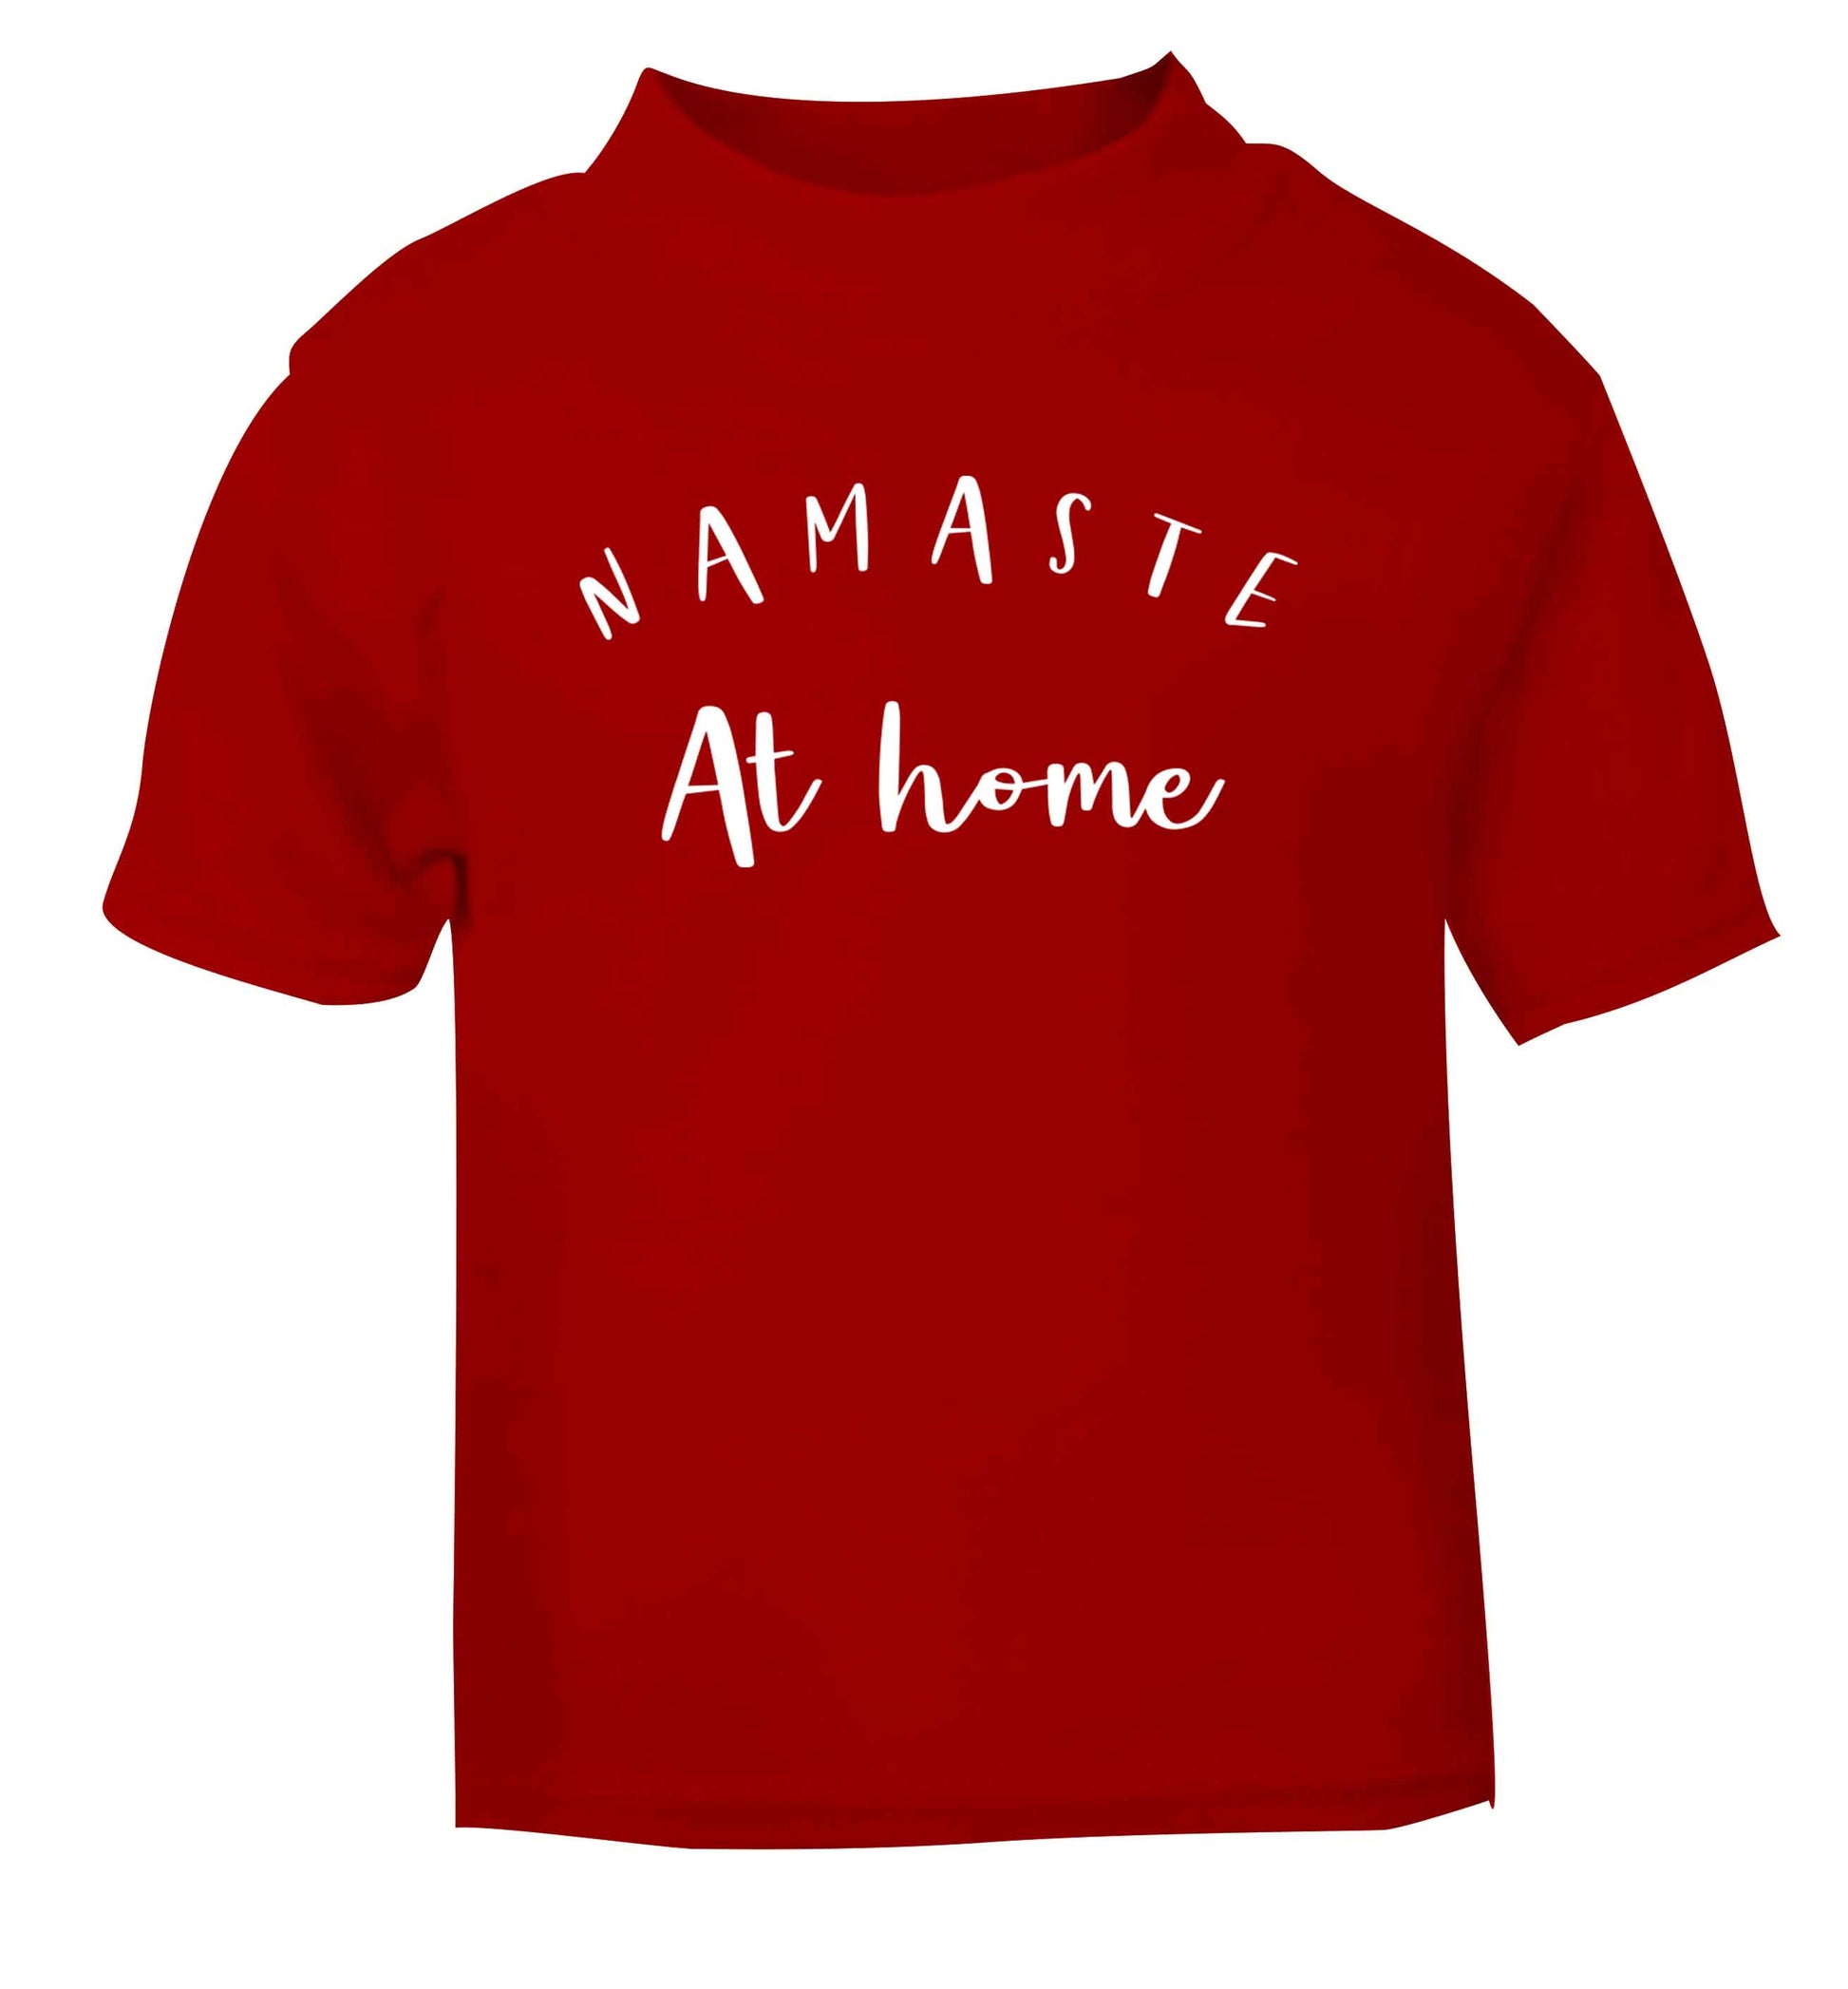 Namaste at home red Baby Toddler Tshirt 2 Years